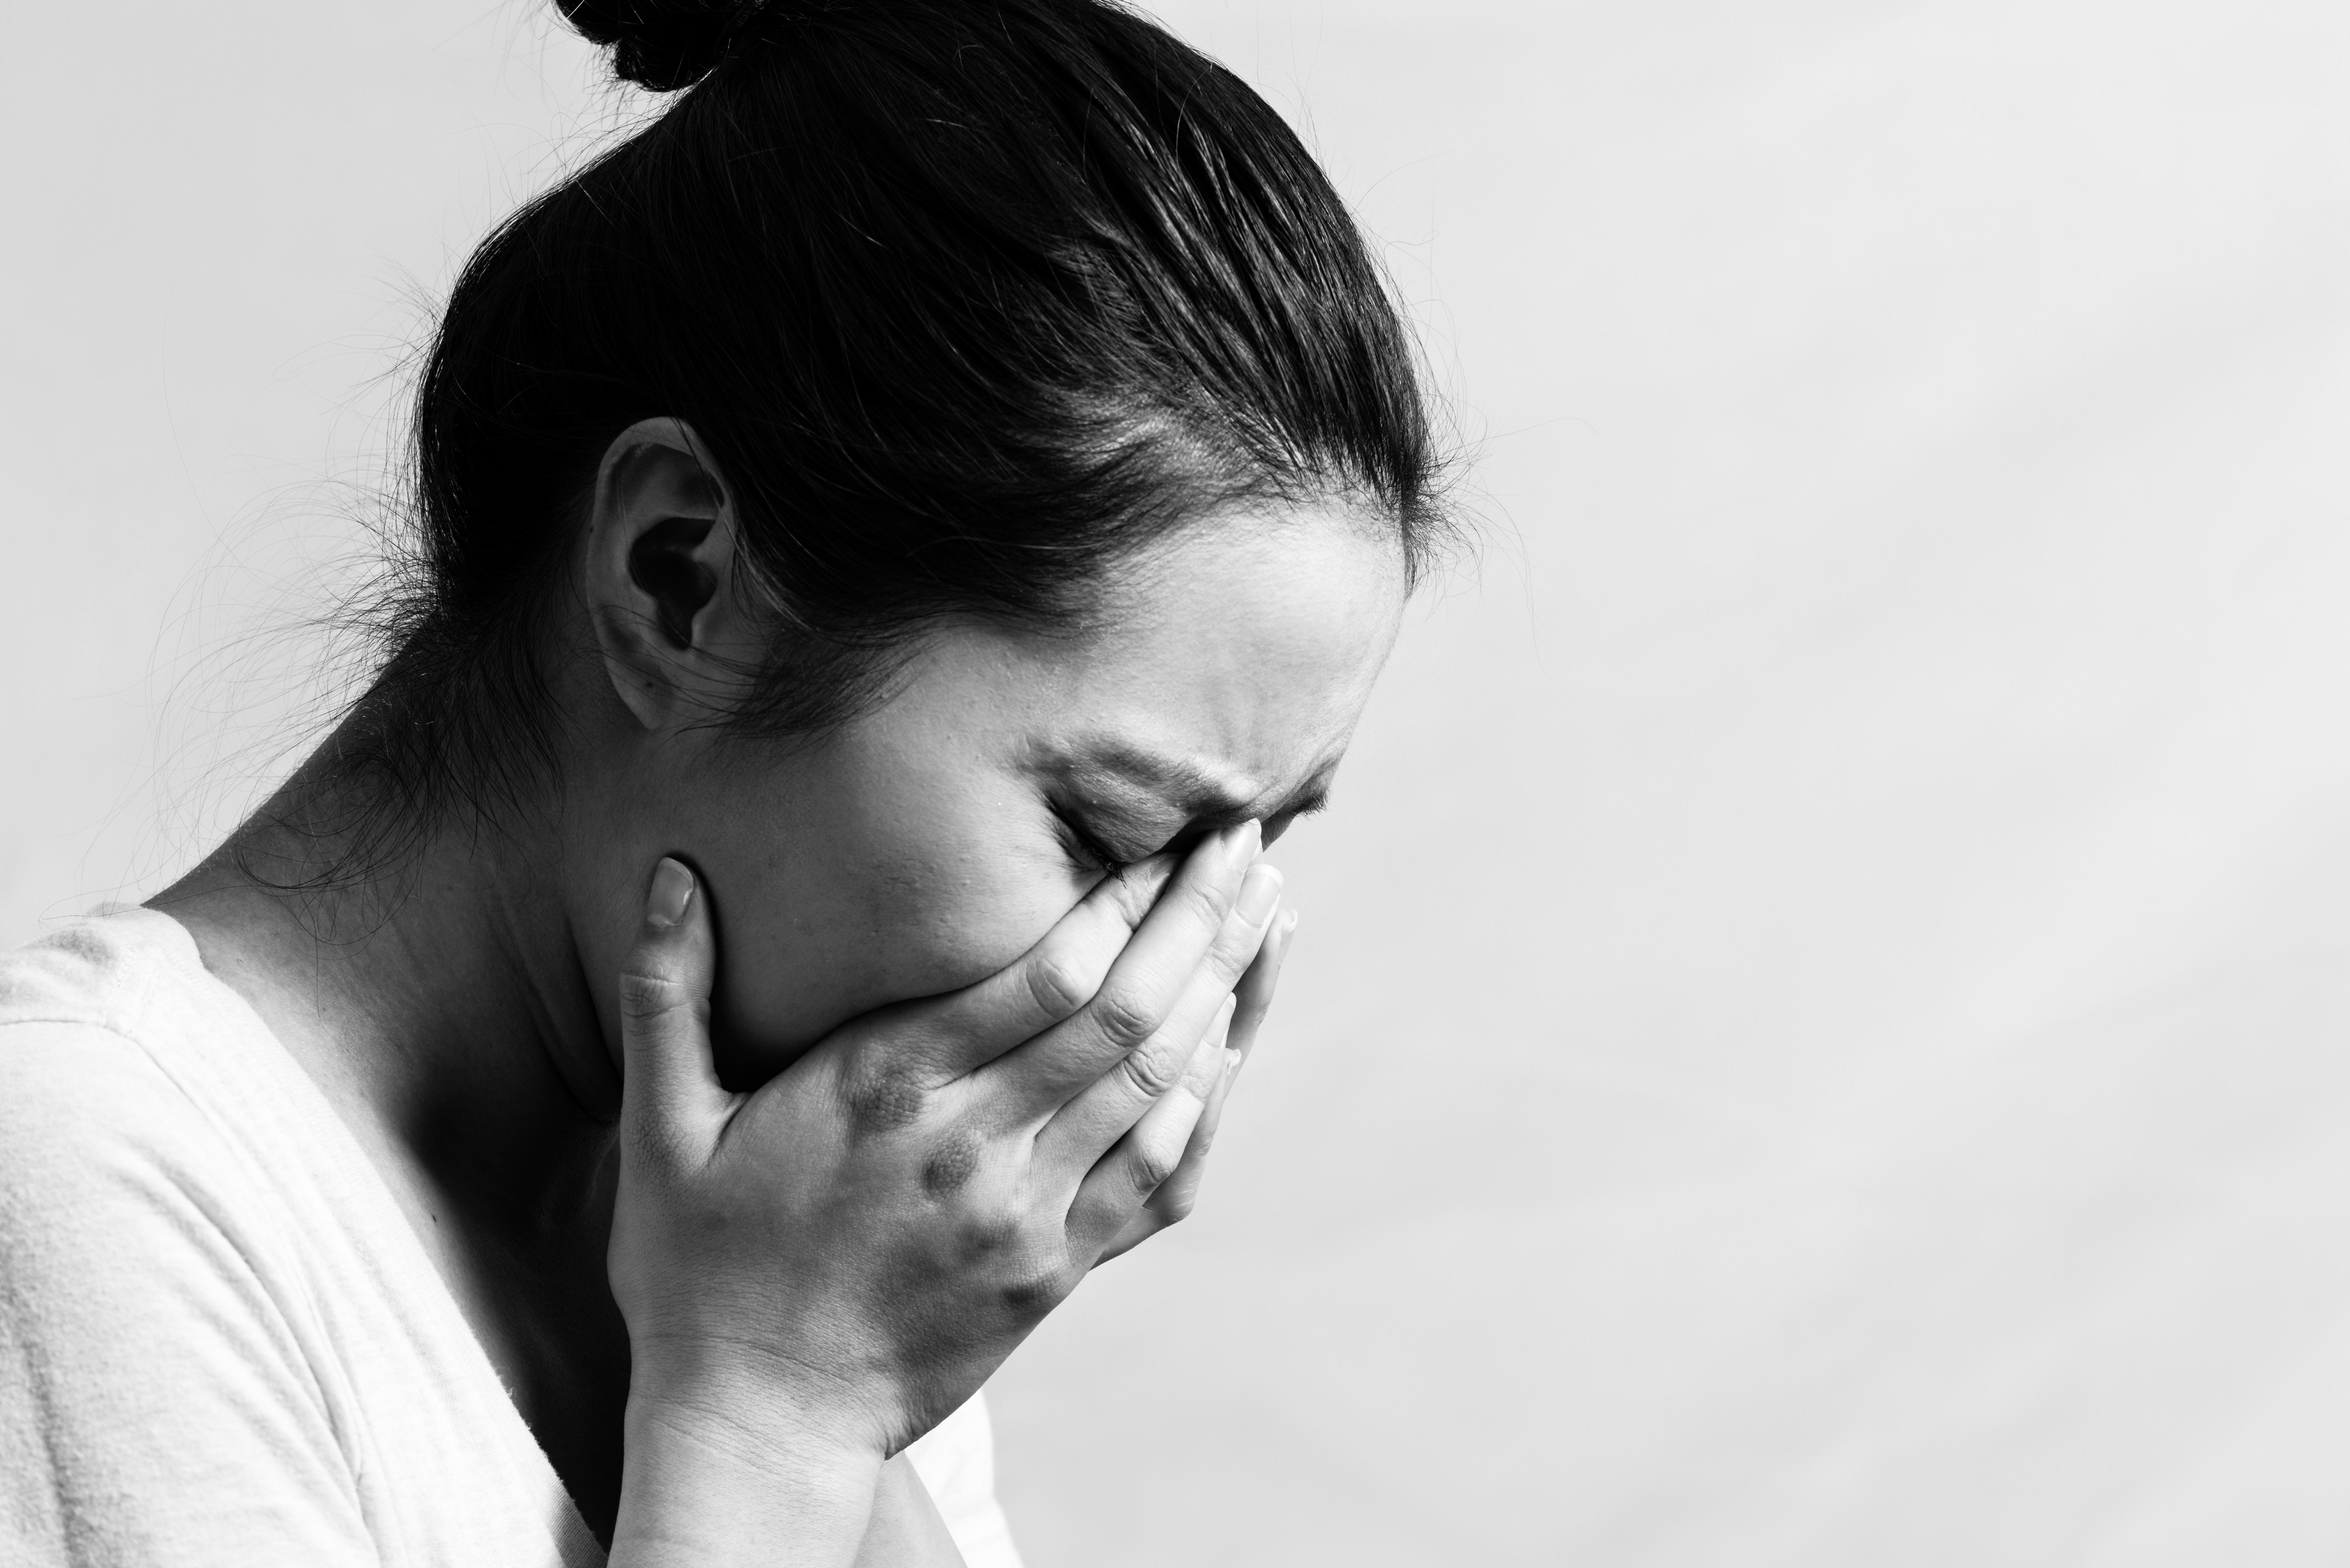 Woman crying | Source: Shutterstock